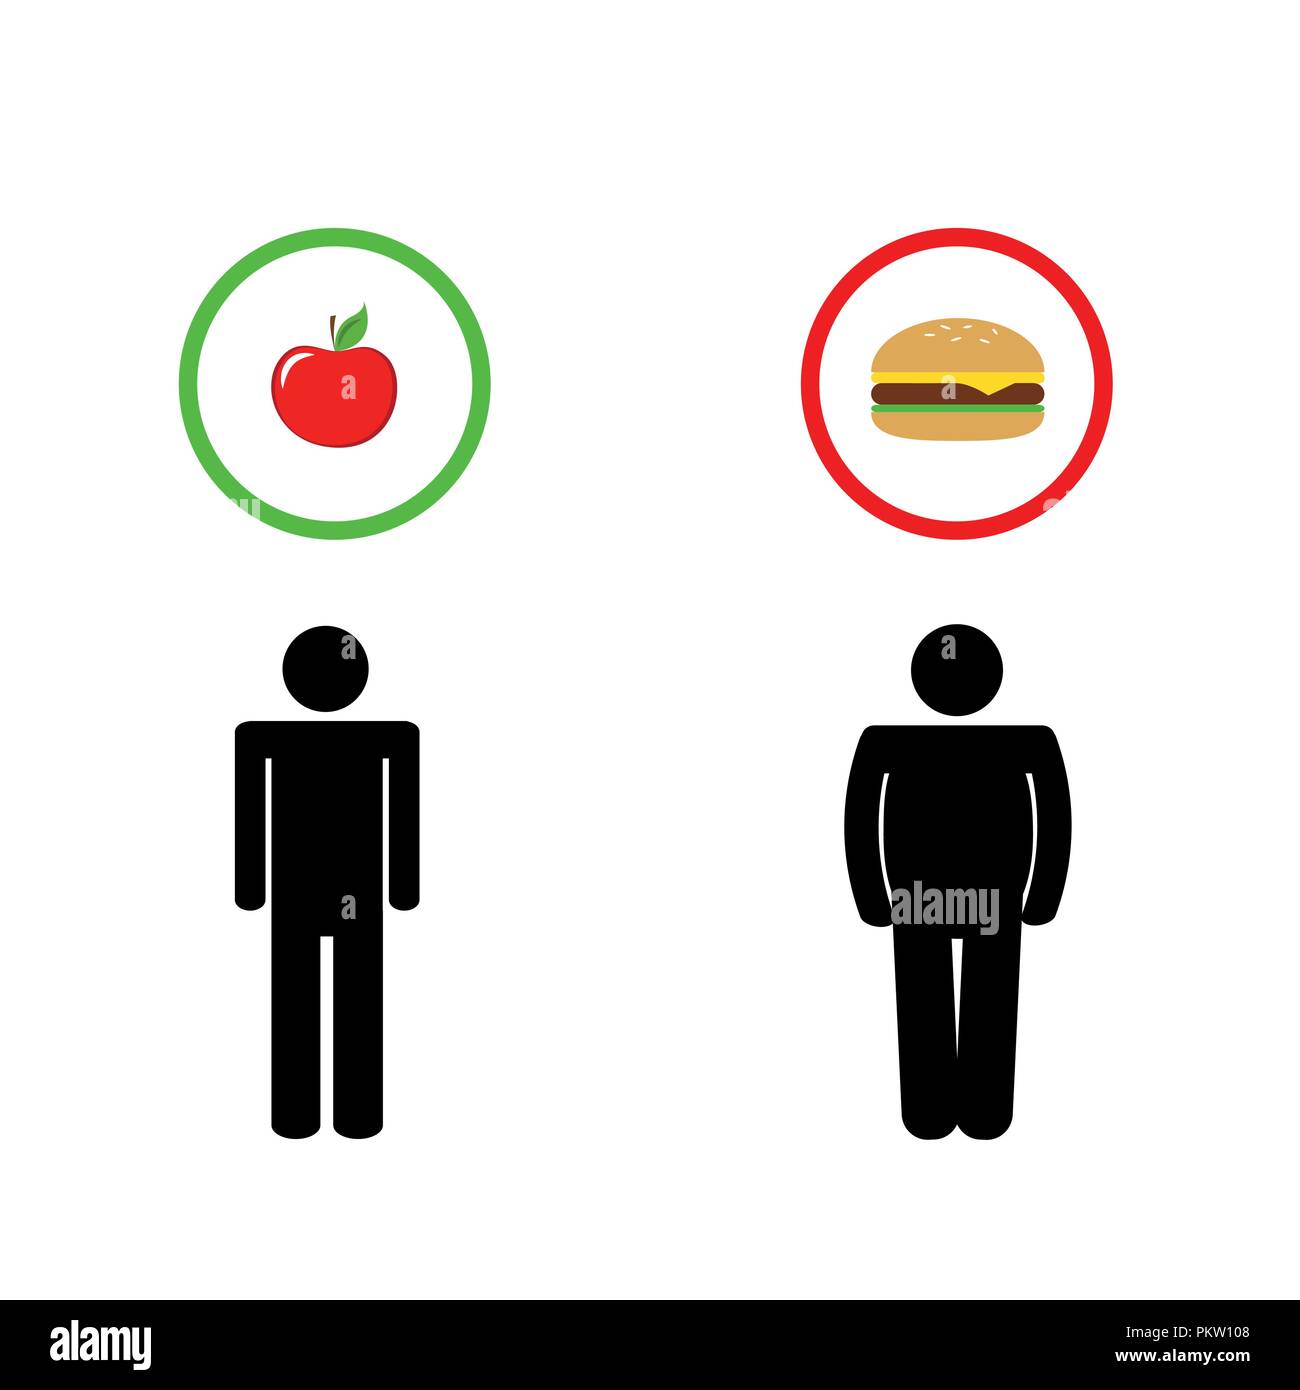 Man denke über gesunde und ungesunde fast food Piktogramm Vektor-illustration EPS 10. Stock Vektor